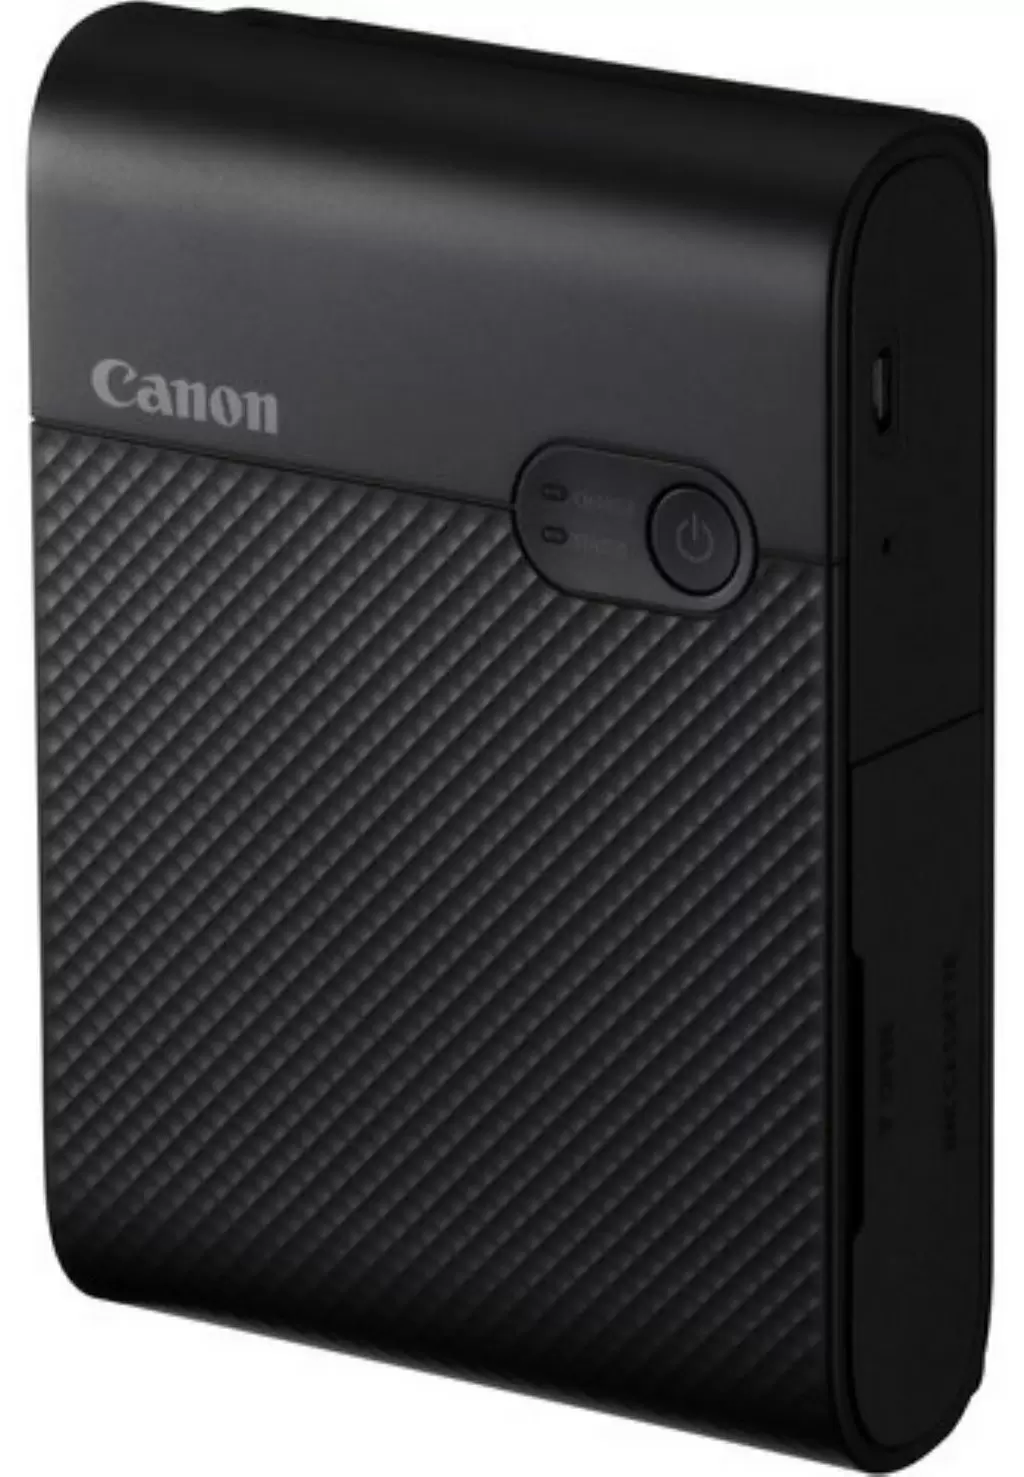 Imprimantă Canon Selphy QX10, negru